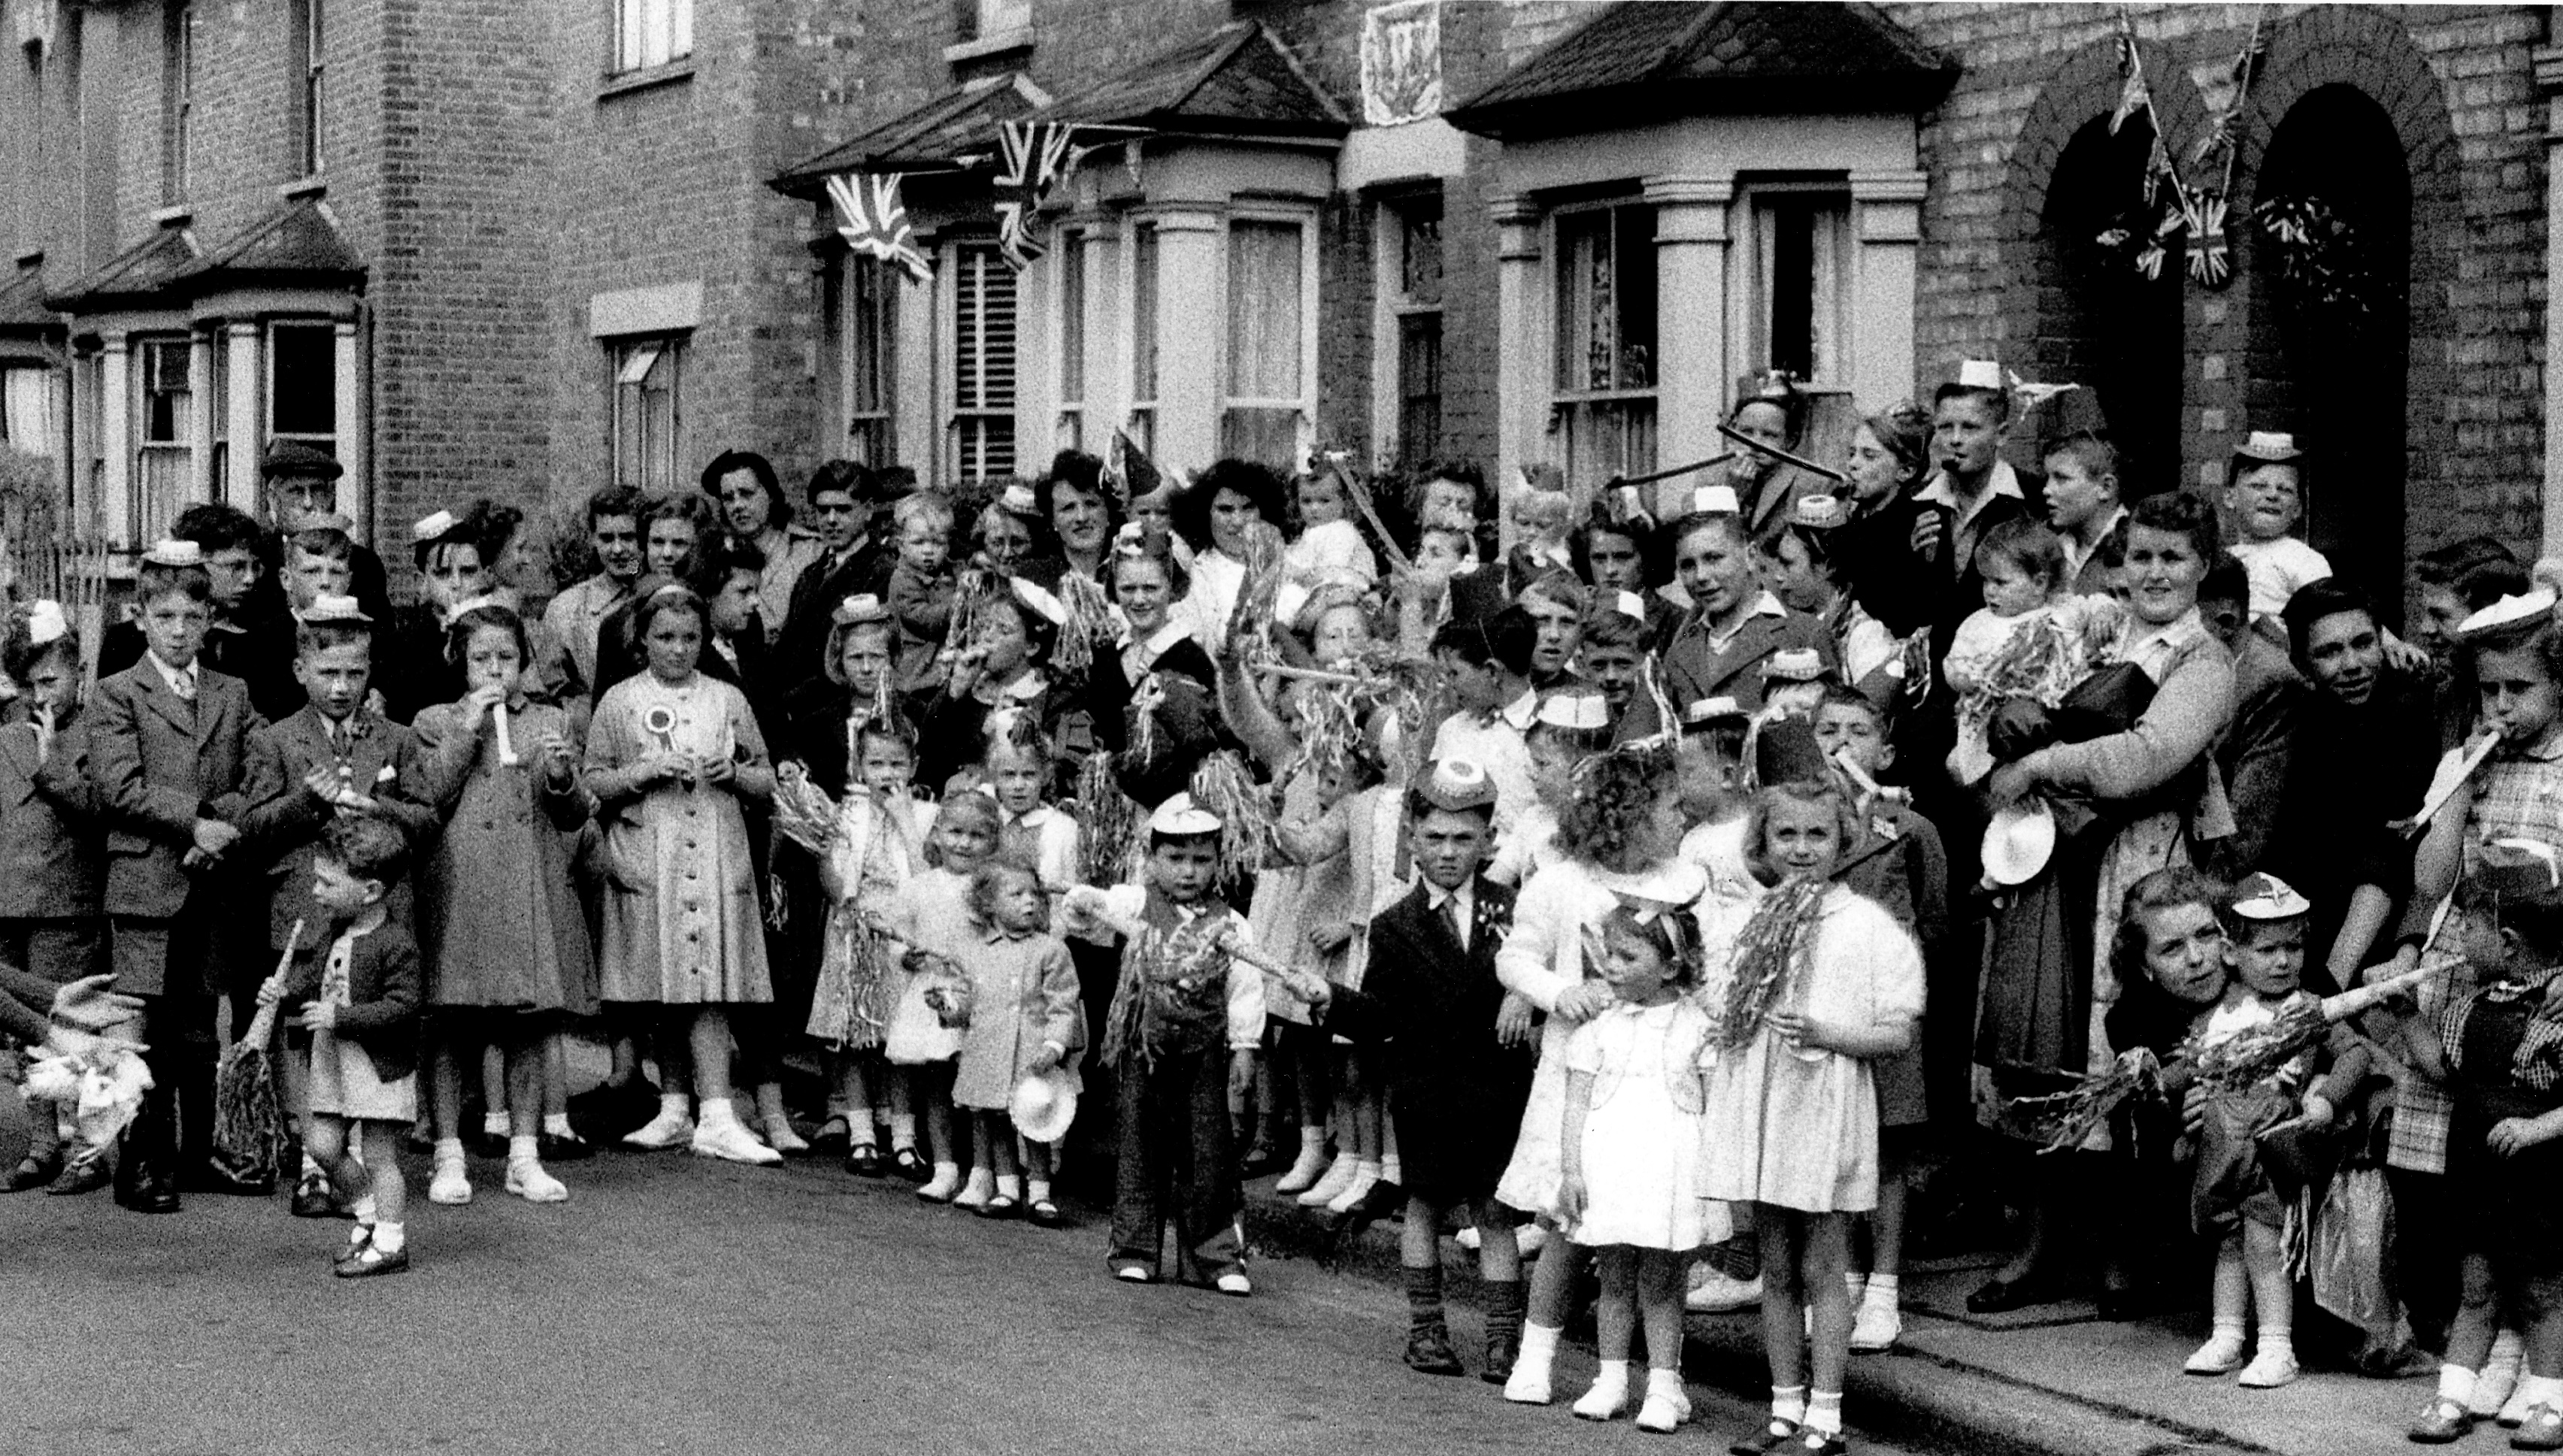 Street party in the borough for Queen Elizabeth II’s Coronation, Avenue Road, Kingston, June 1953